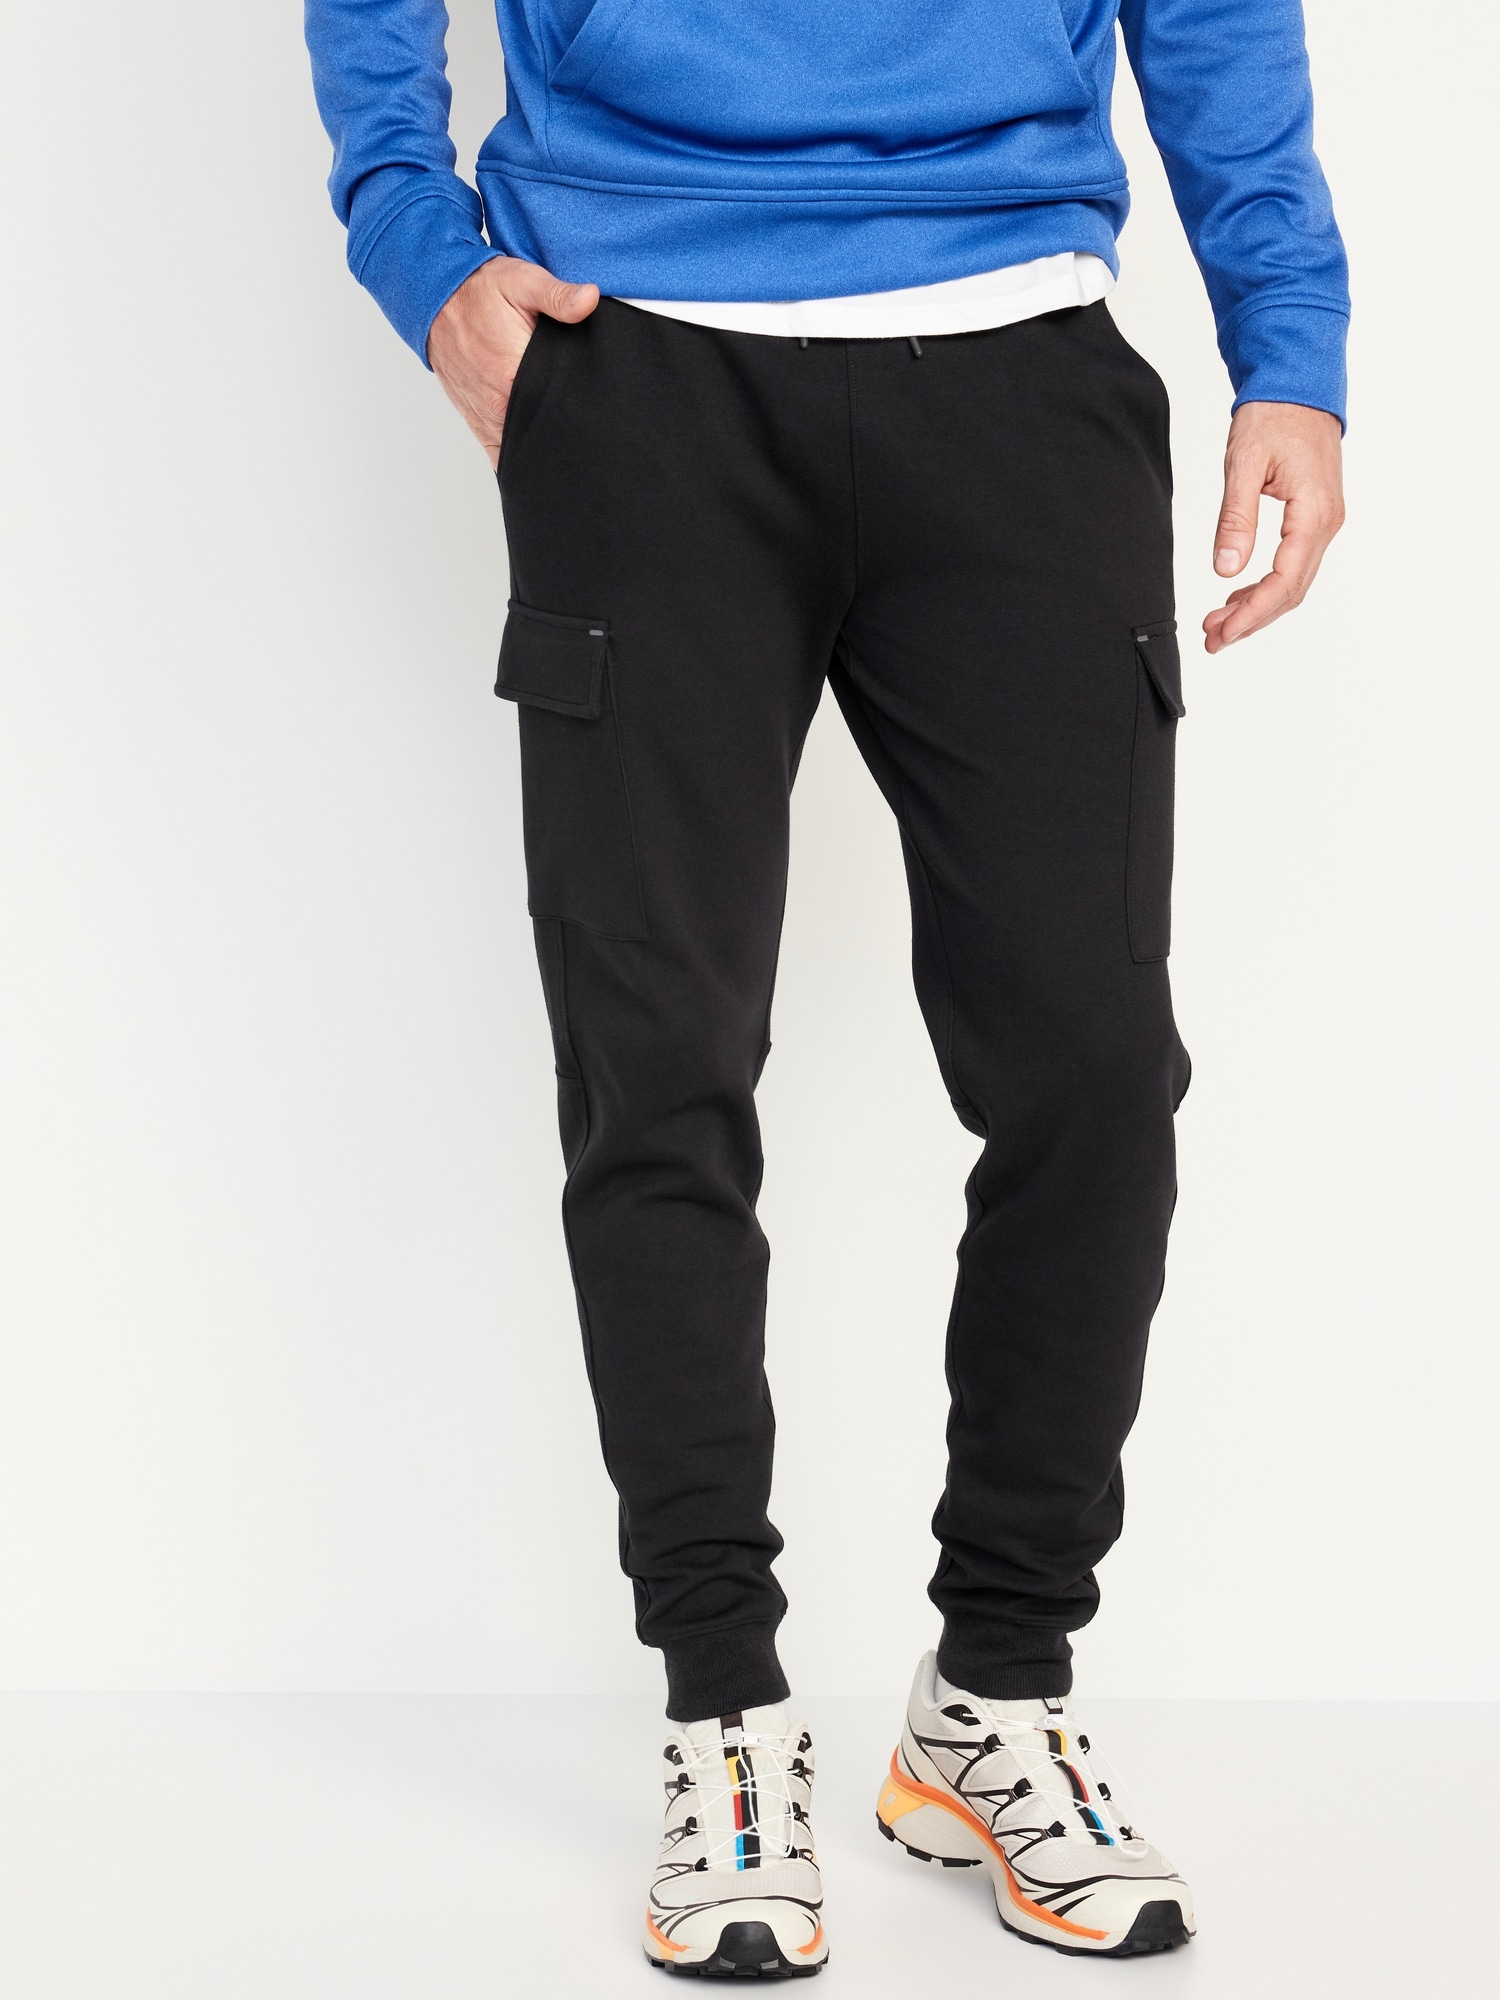 Pudolla Men's Workout Athletic Pants Elastic Waist Jogging Running Pants  for Men with Zipper Pockets Black Large